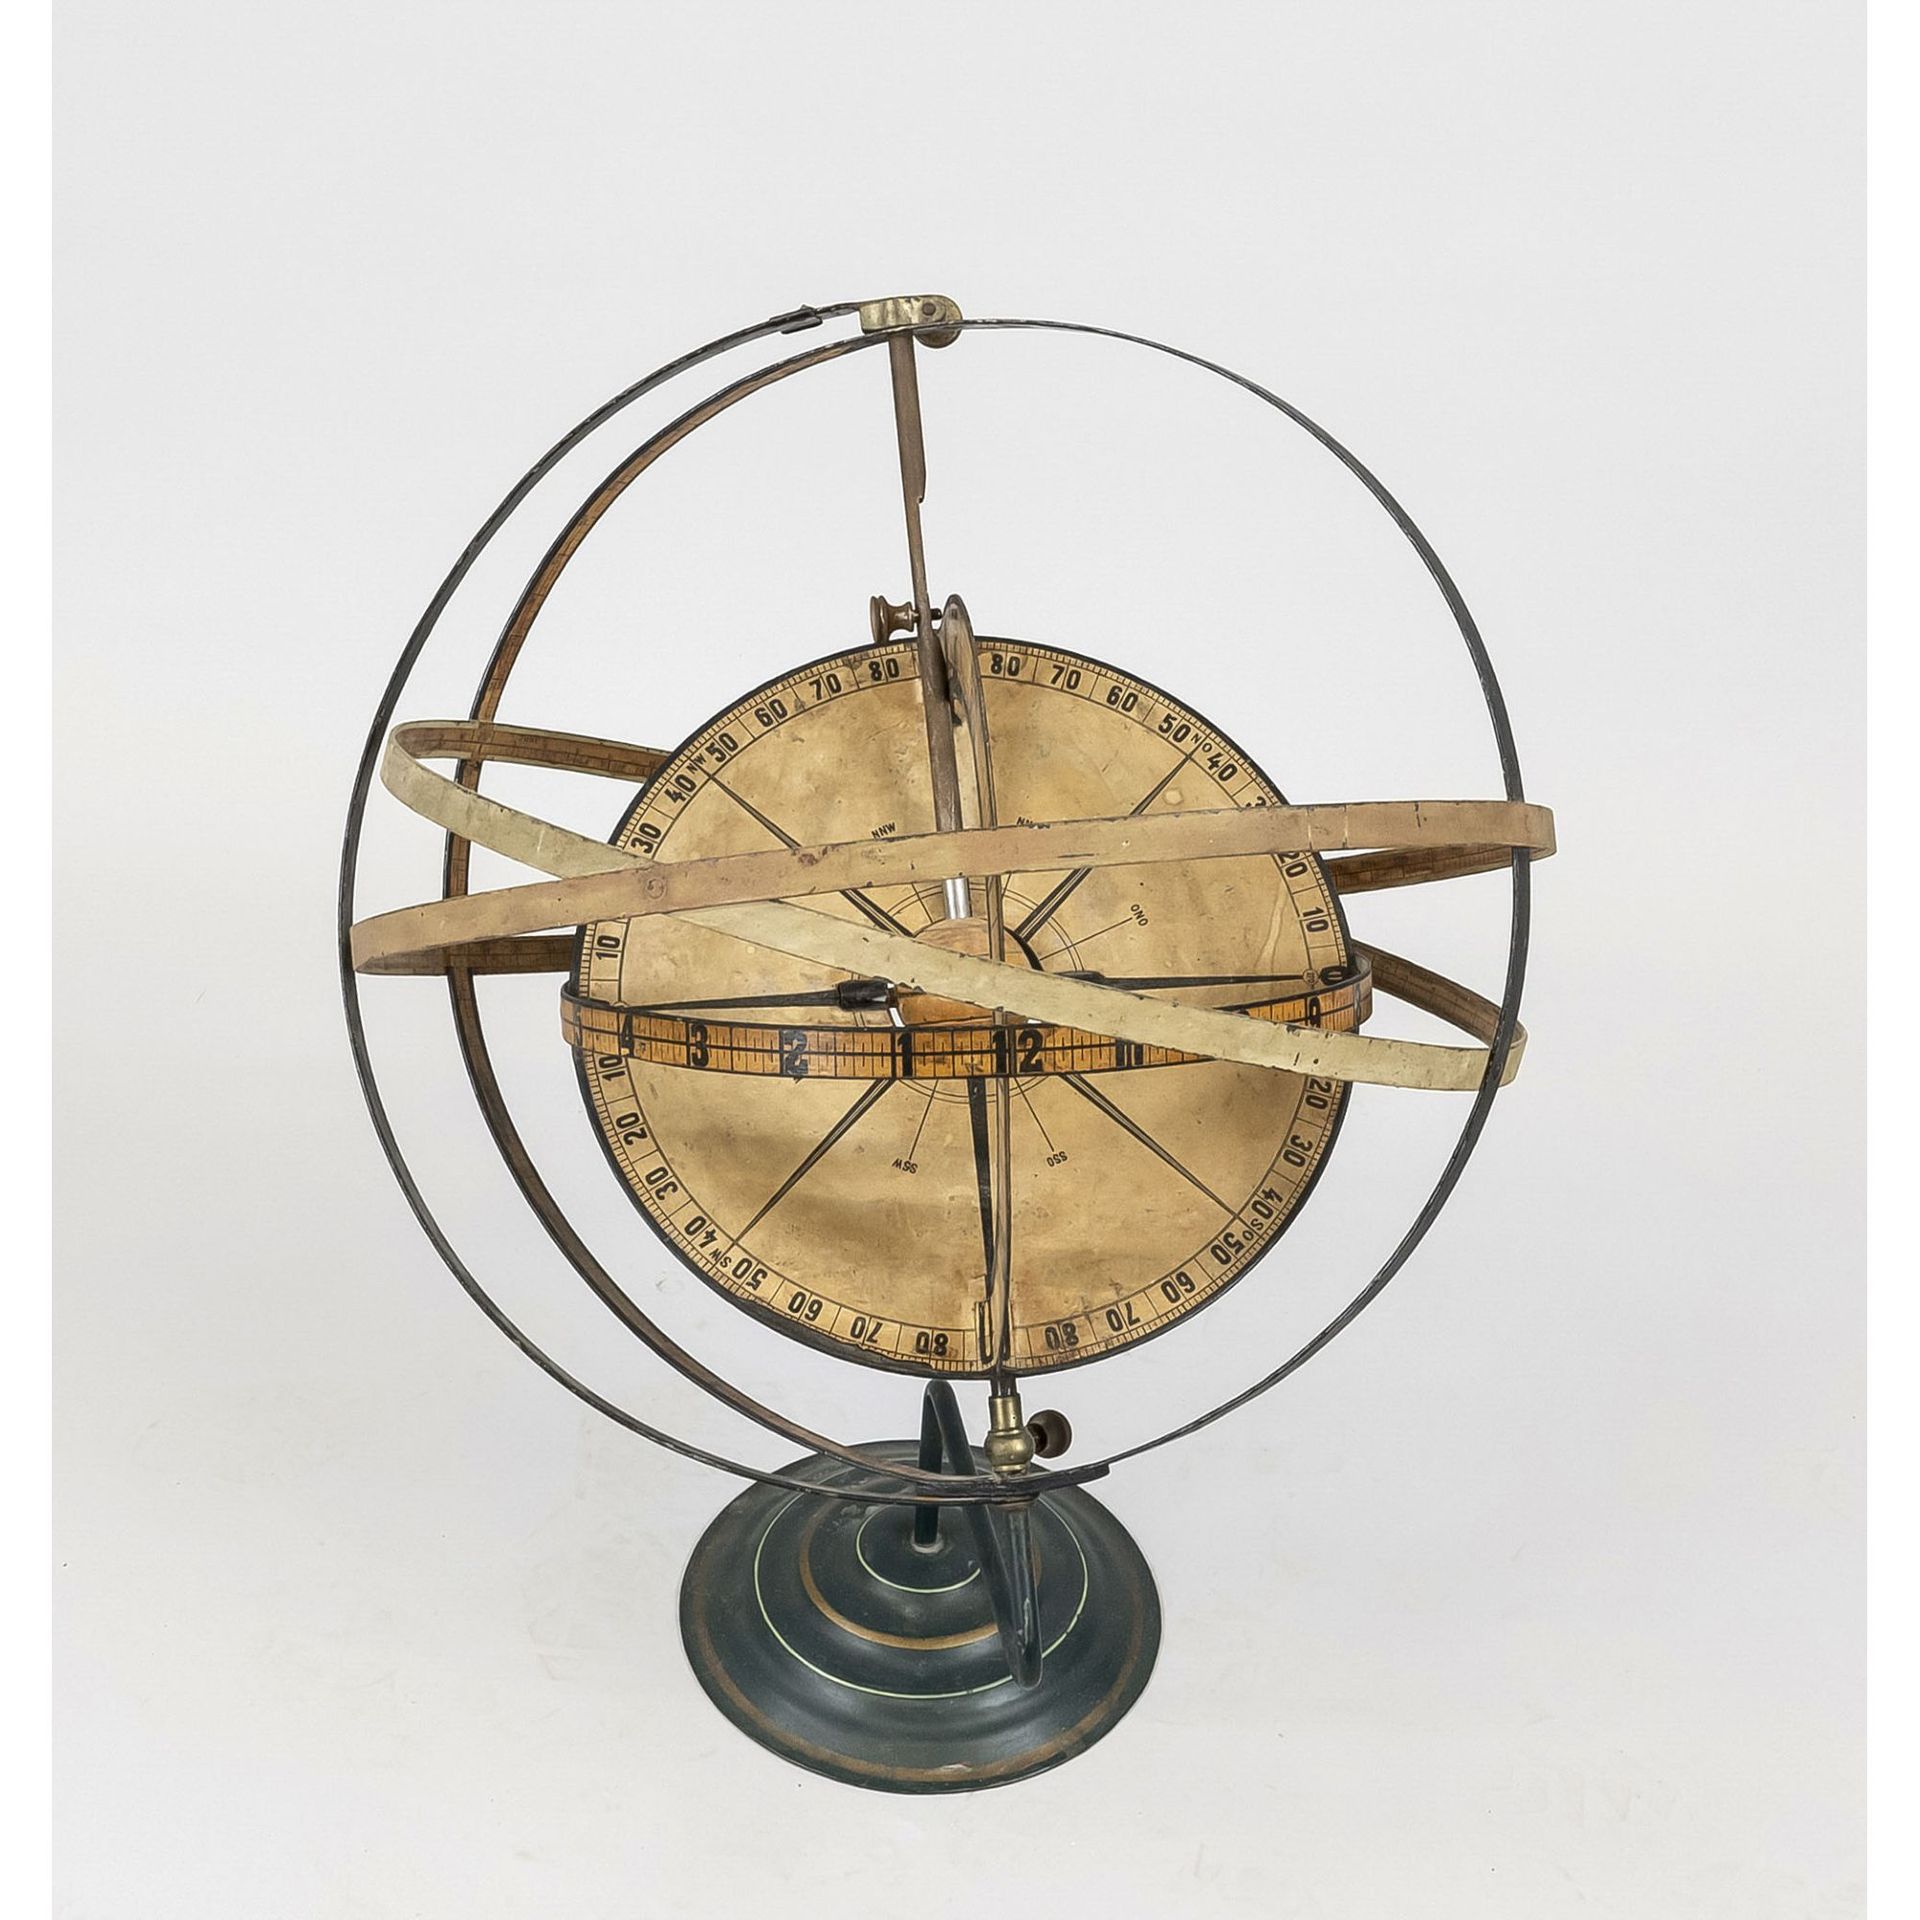 Null 浑天仪/球形星盘，大概 19 世纪晚期，铁质，多色涂漆，带鳞片，略有摩擦，高约 60 厘米